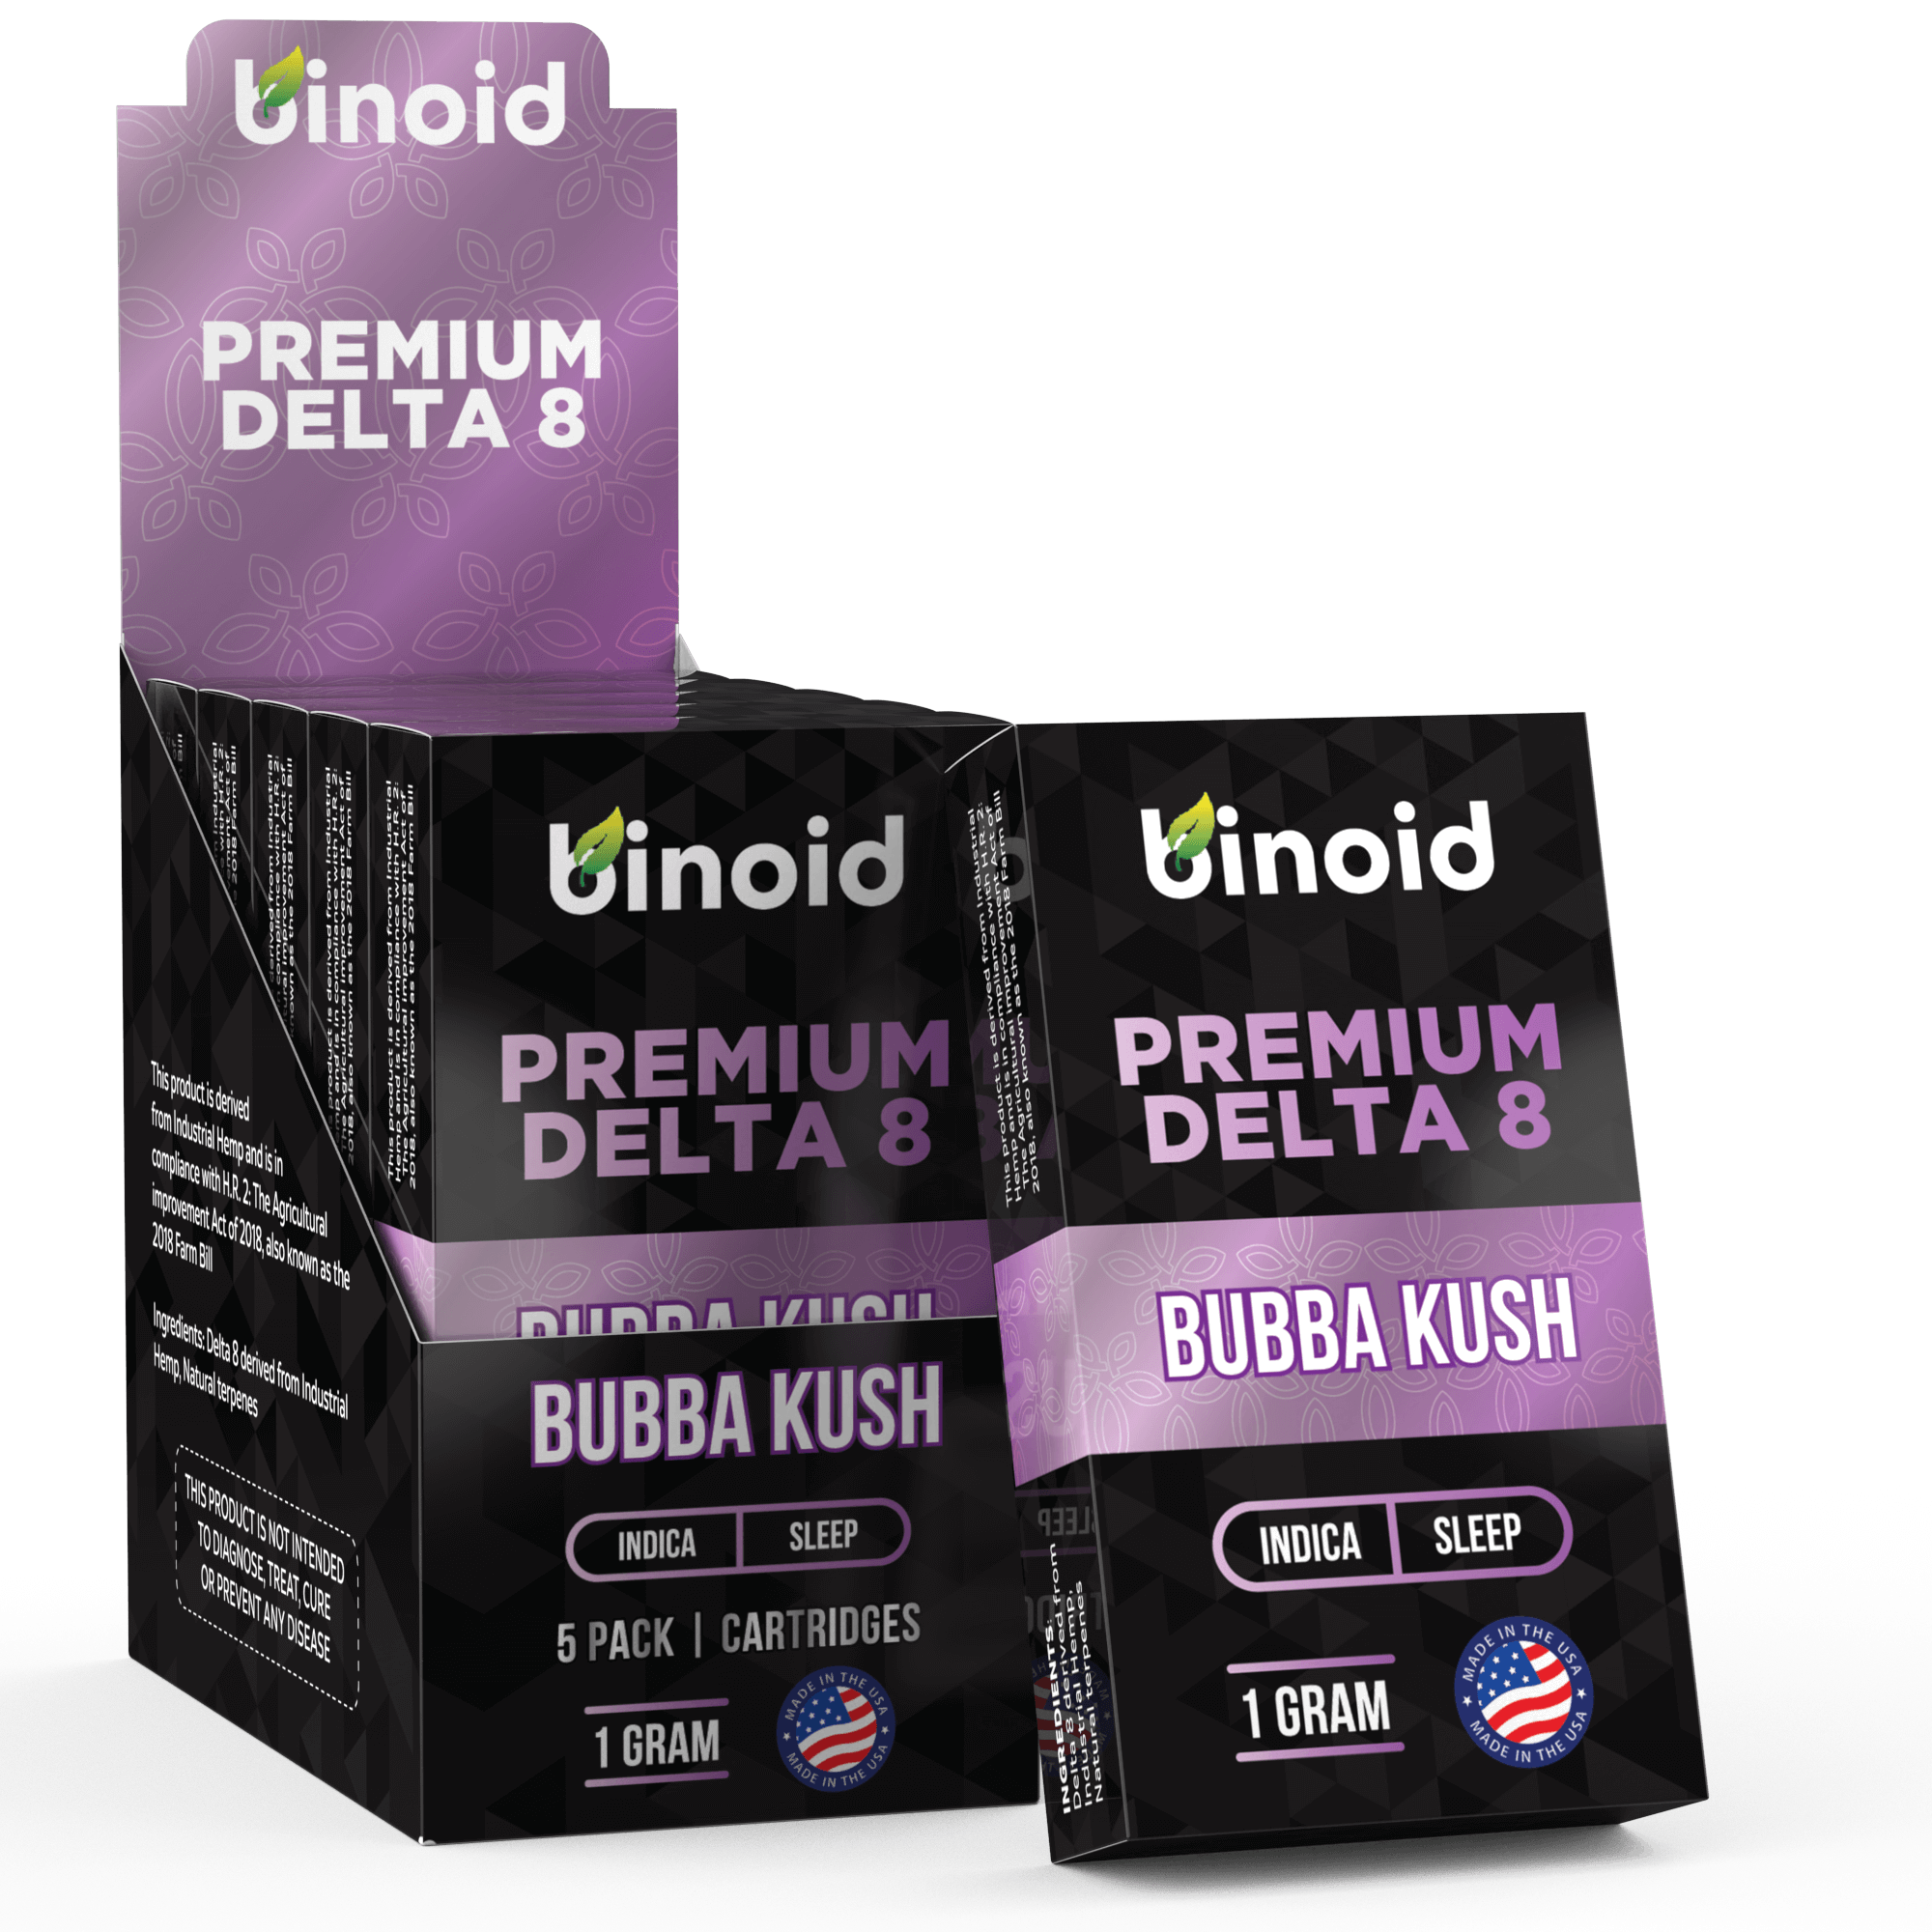 Binoid Delta 8 THC Vape Cartridge - Bubba Kush Best Price